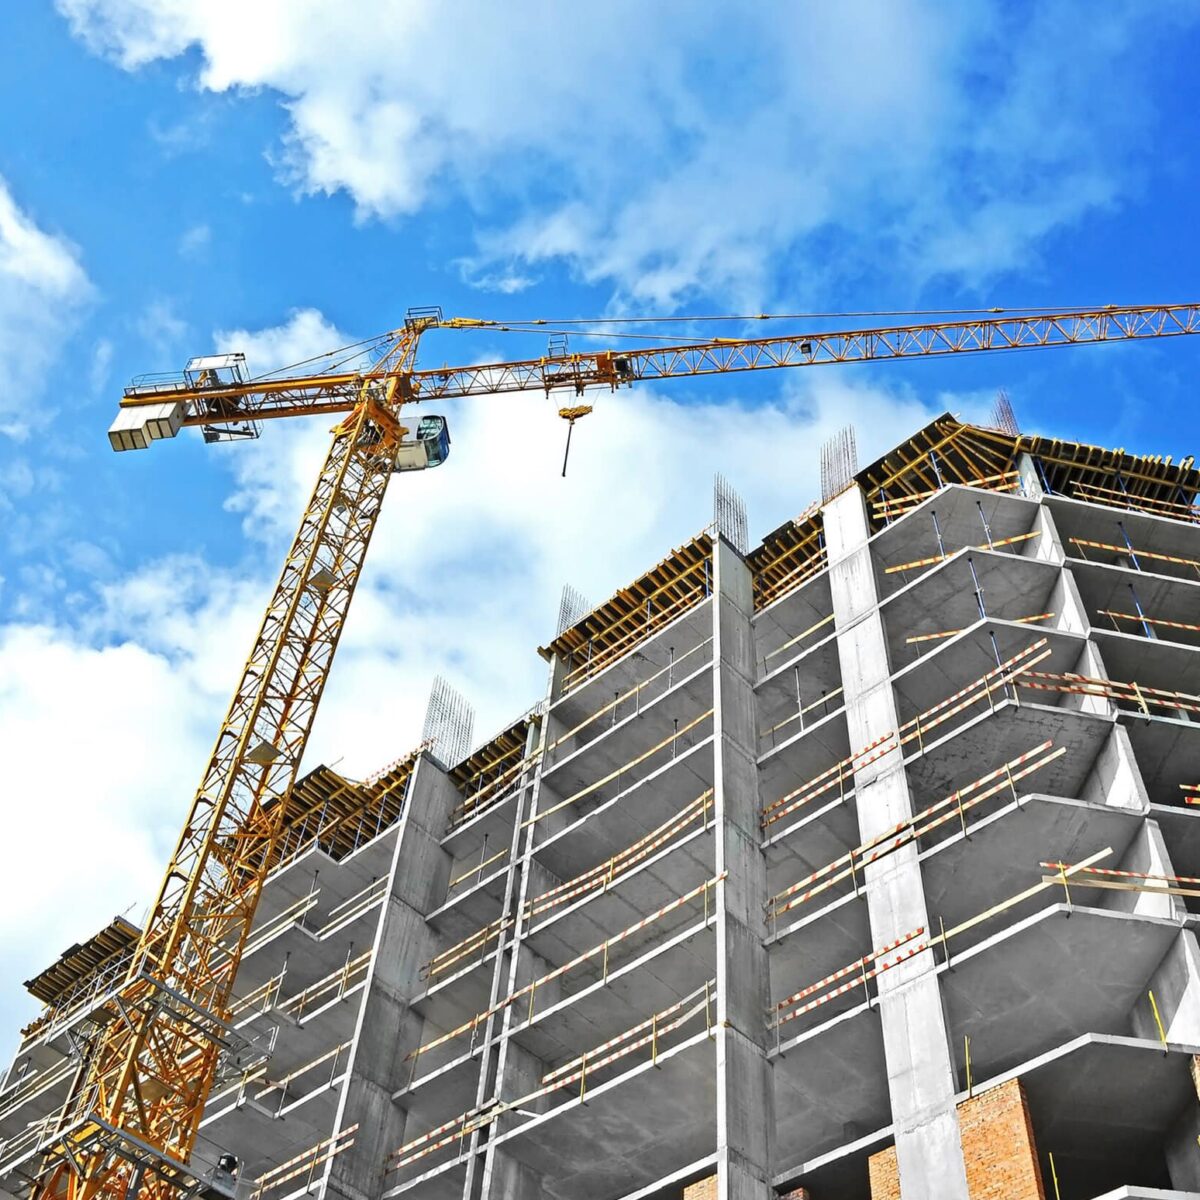 Crane And Building Construction Site Against Blue Sky